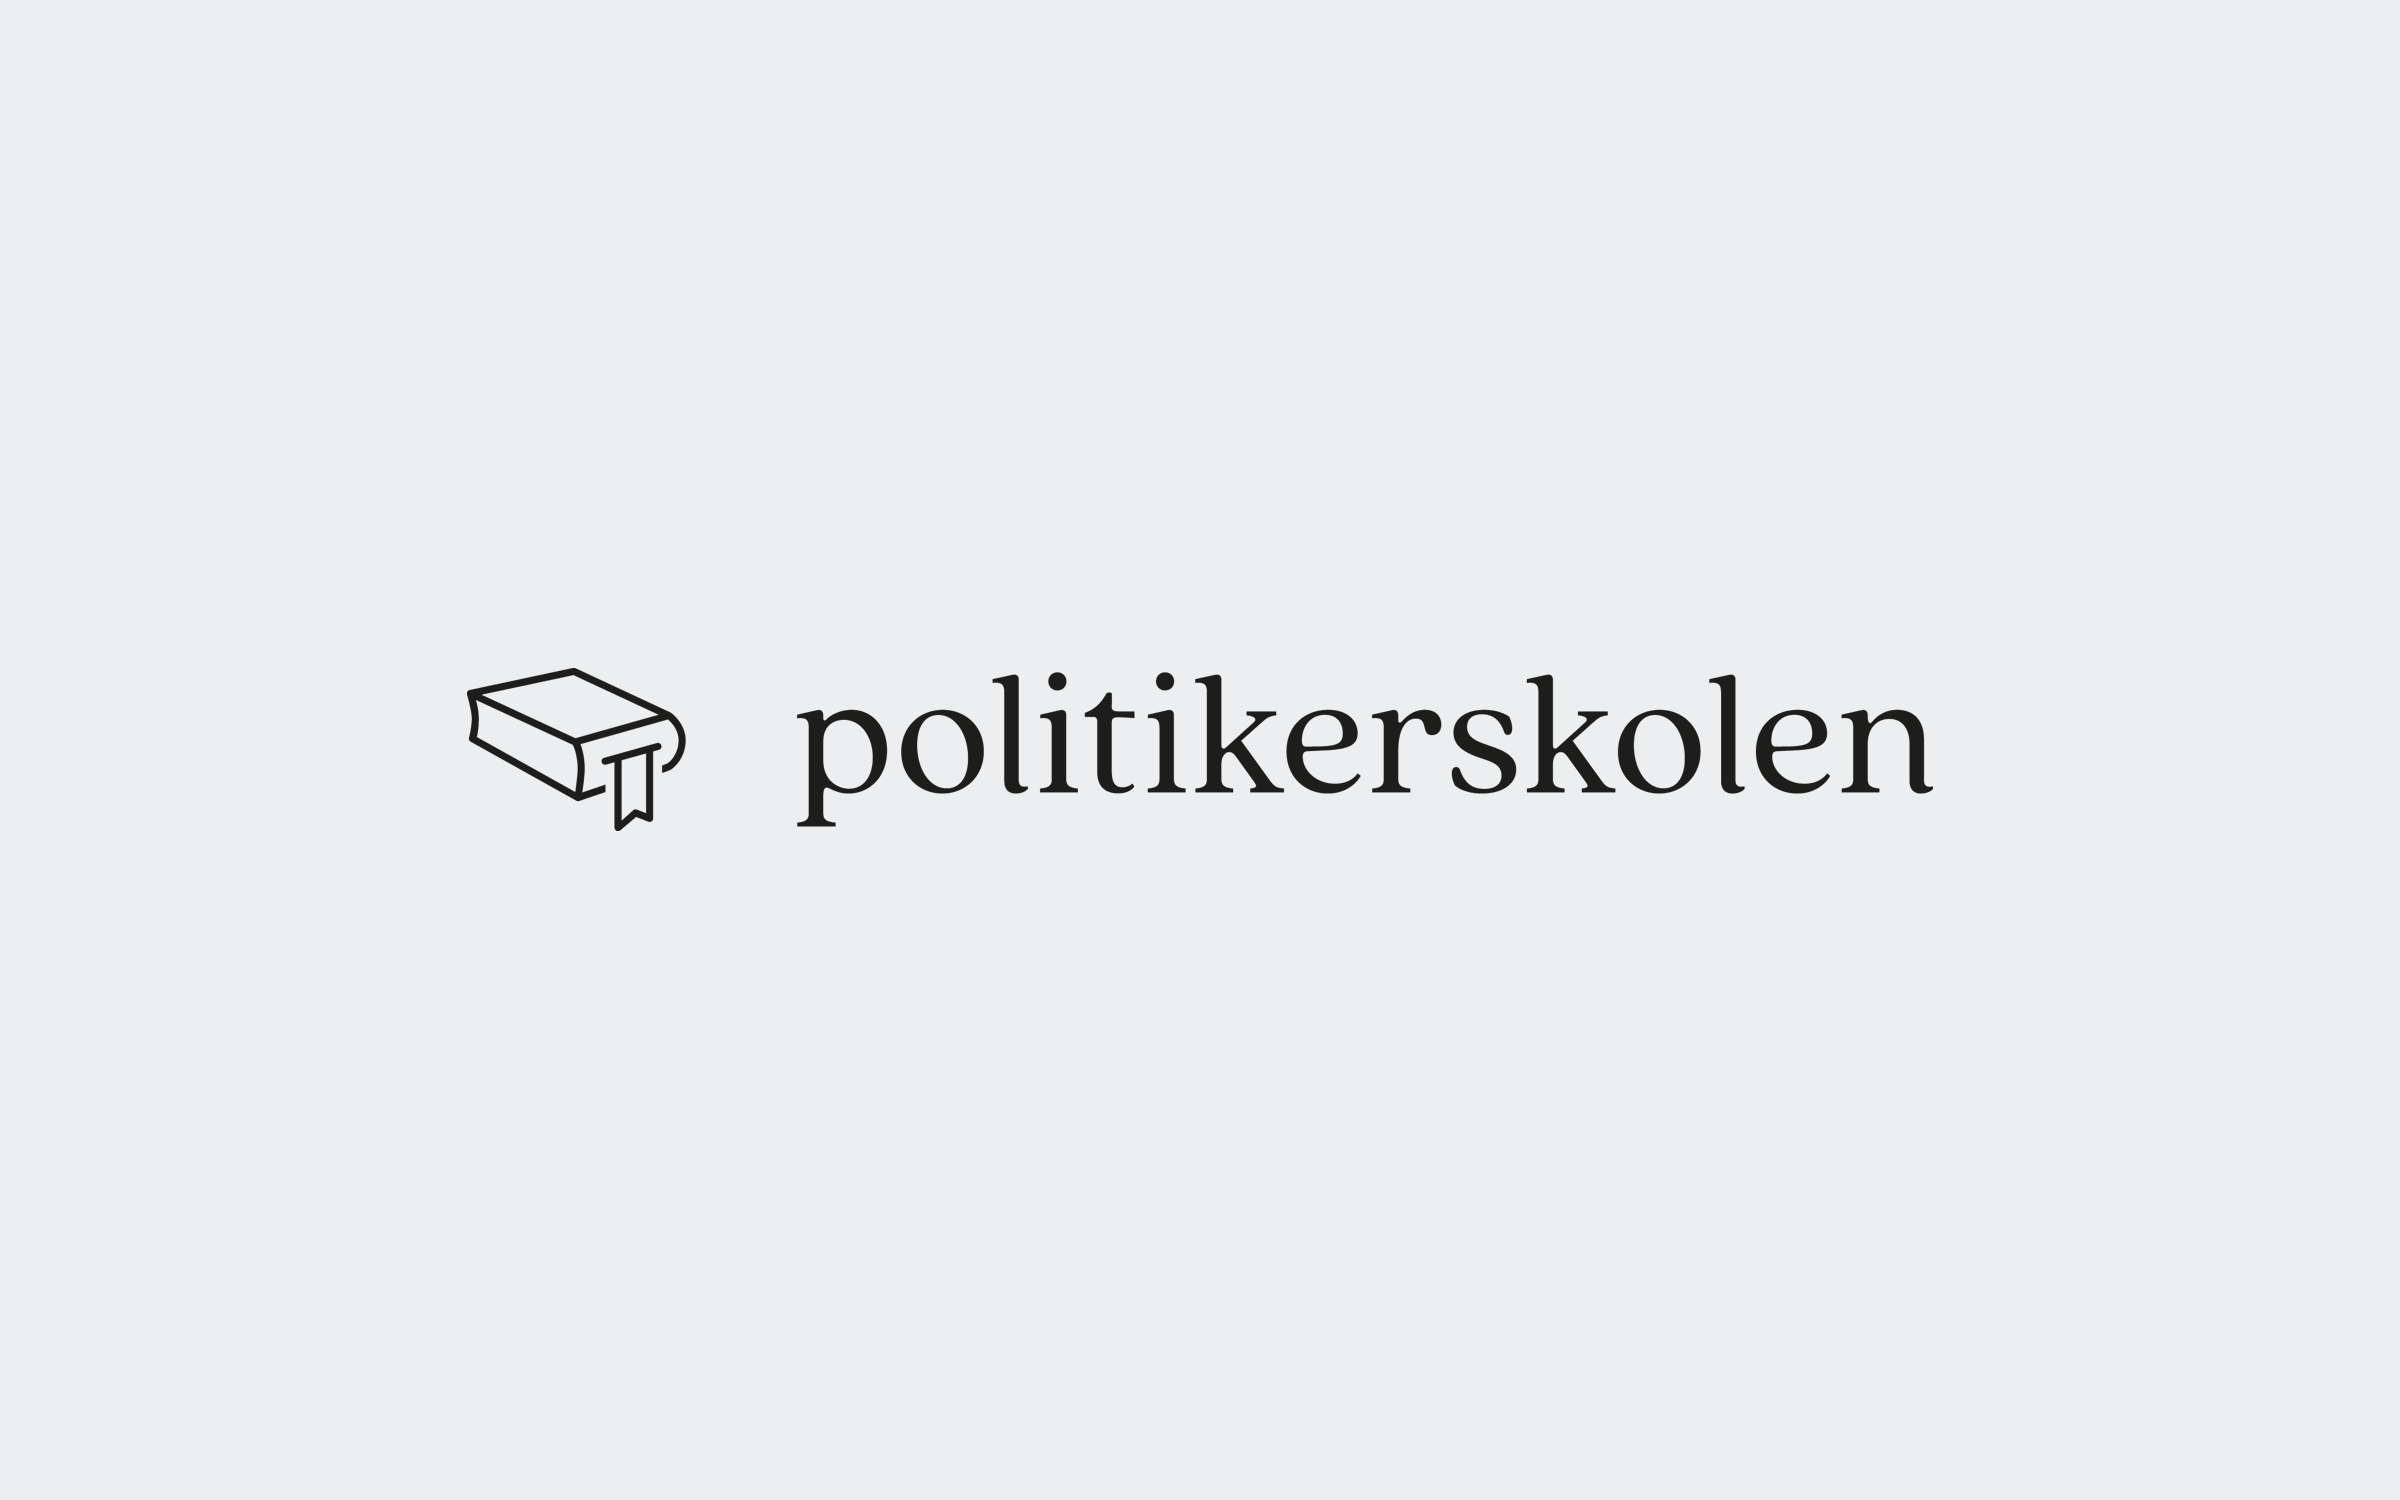 Politikerskolen logo original